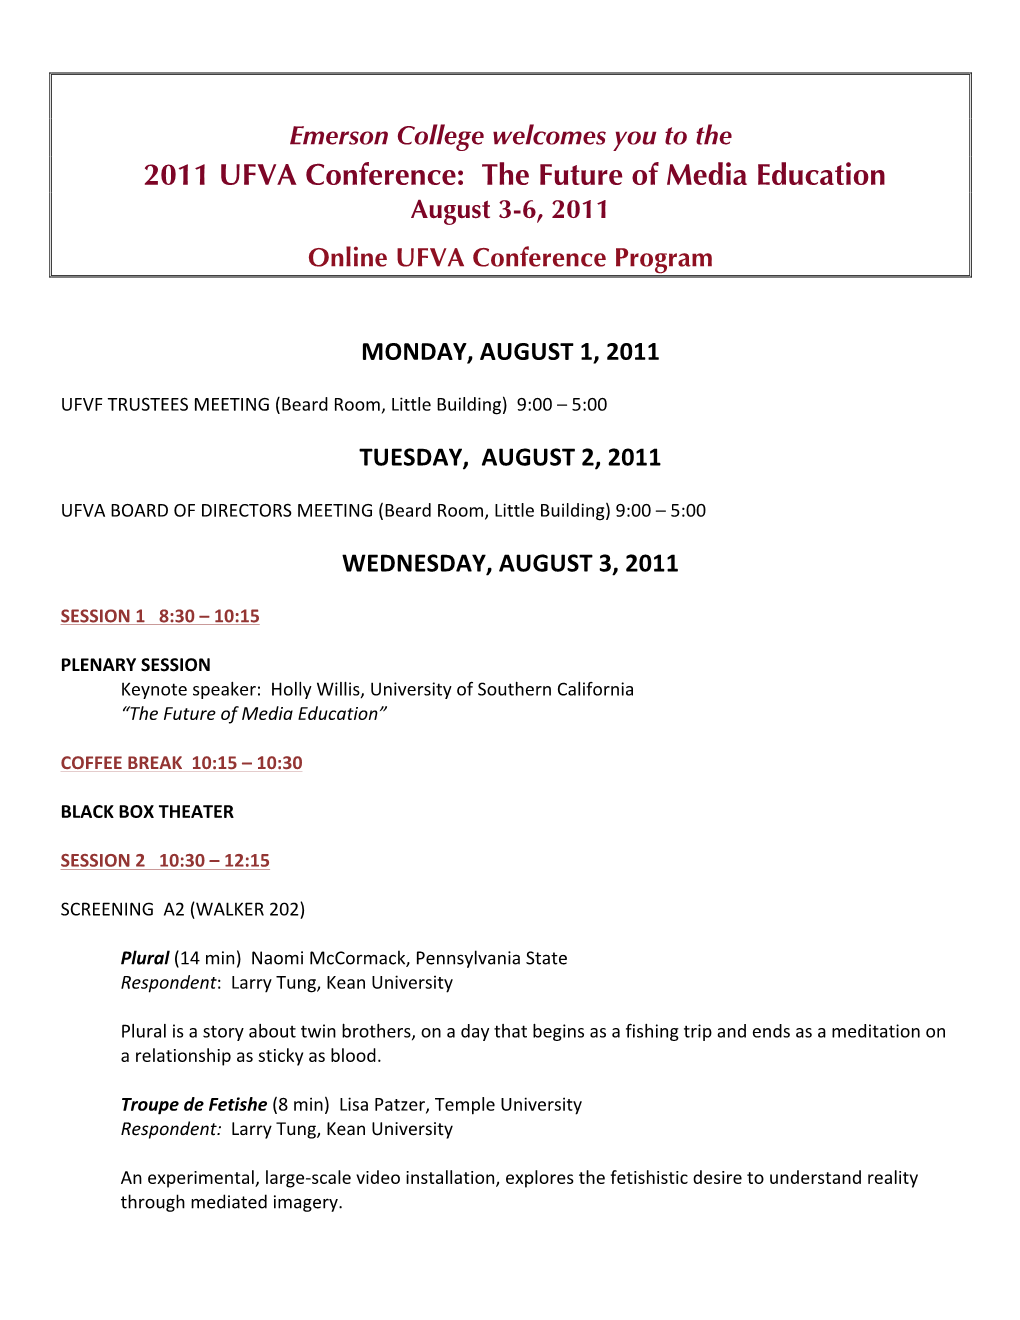 2011 UFVA Conference: the Future of Media Education August 3-6, 2011 Online UFVA Conference Program